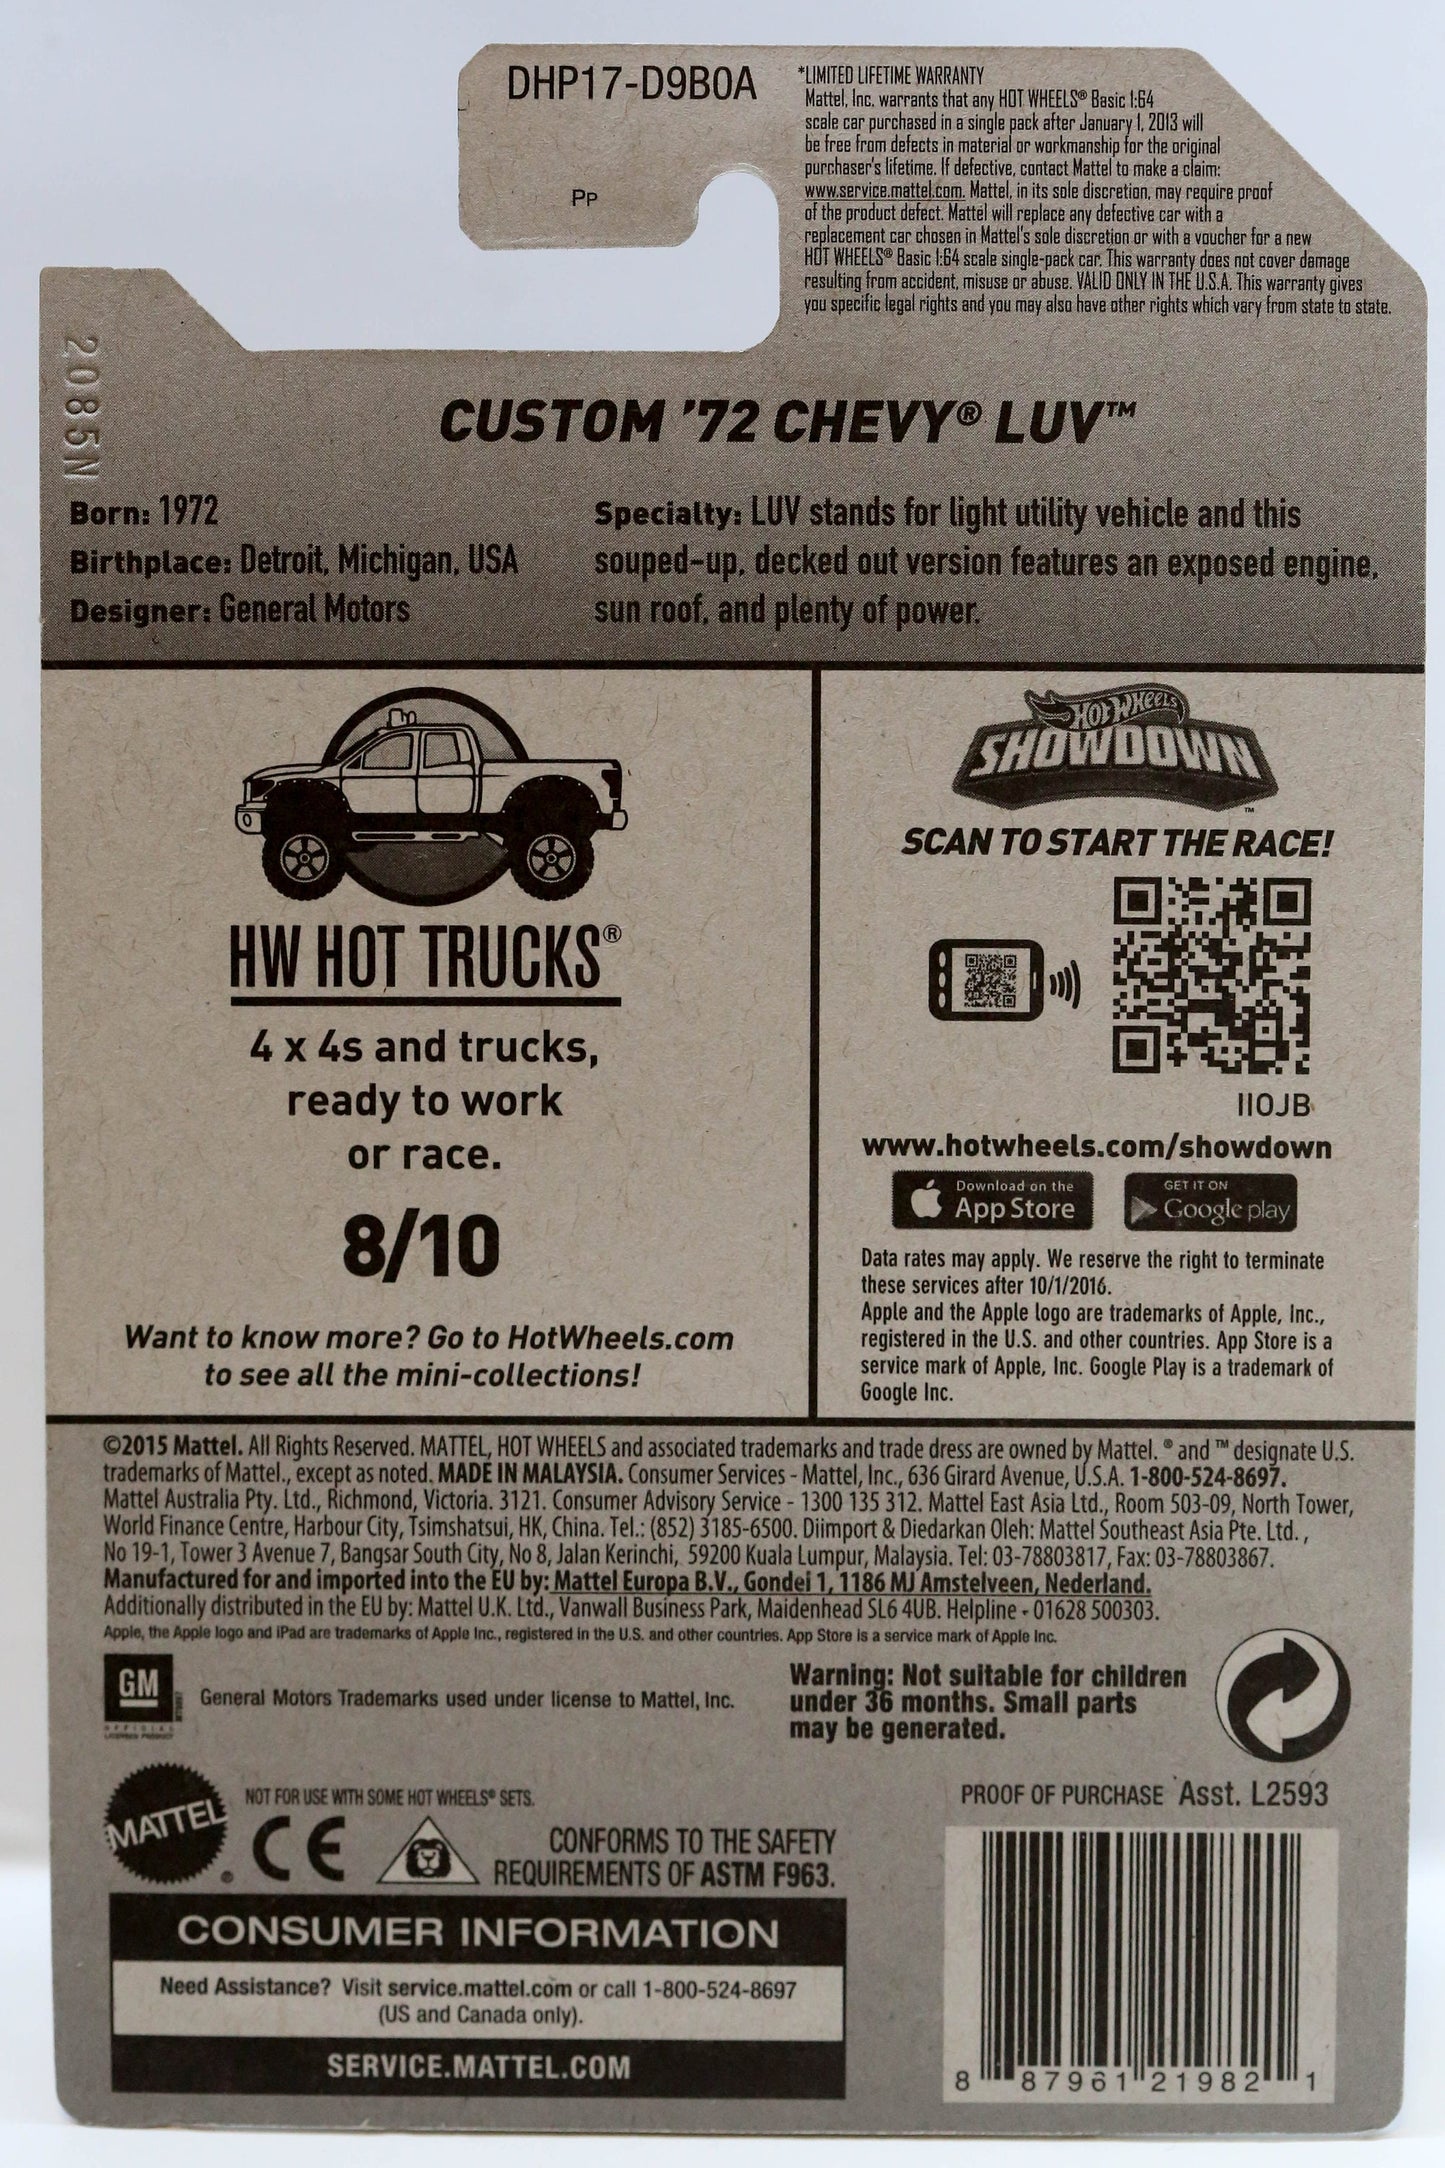 Hot Wheels Custom '72 Chevy Luv HW Hot Trucks DHP17 - Plus (+) a Bonus Hot Wheel